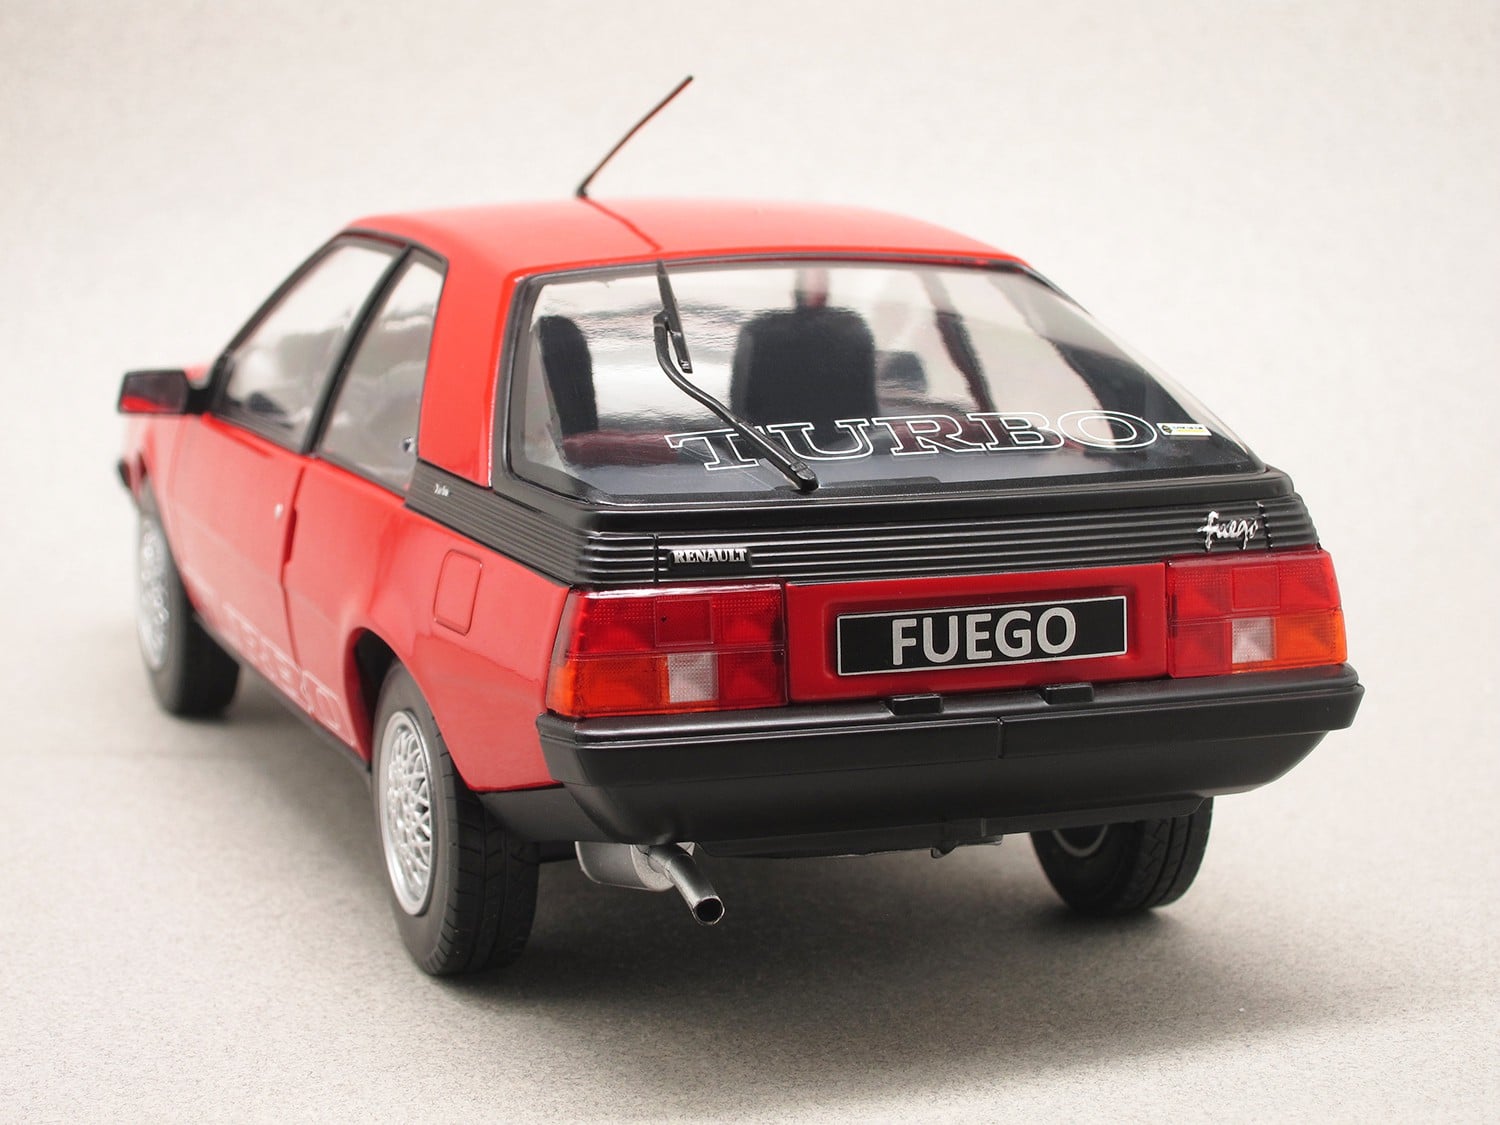 Renault Fuego Turbo red (Solido) 1:18 - Minicarweb